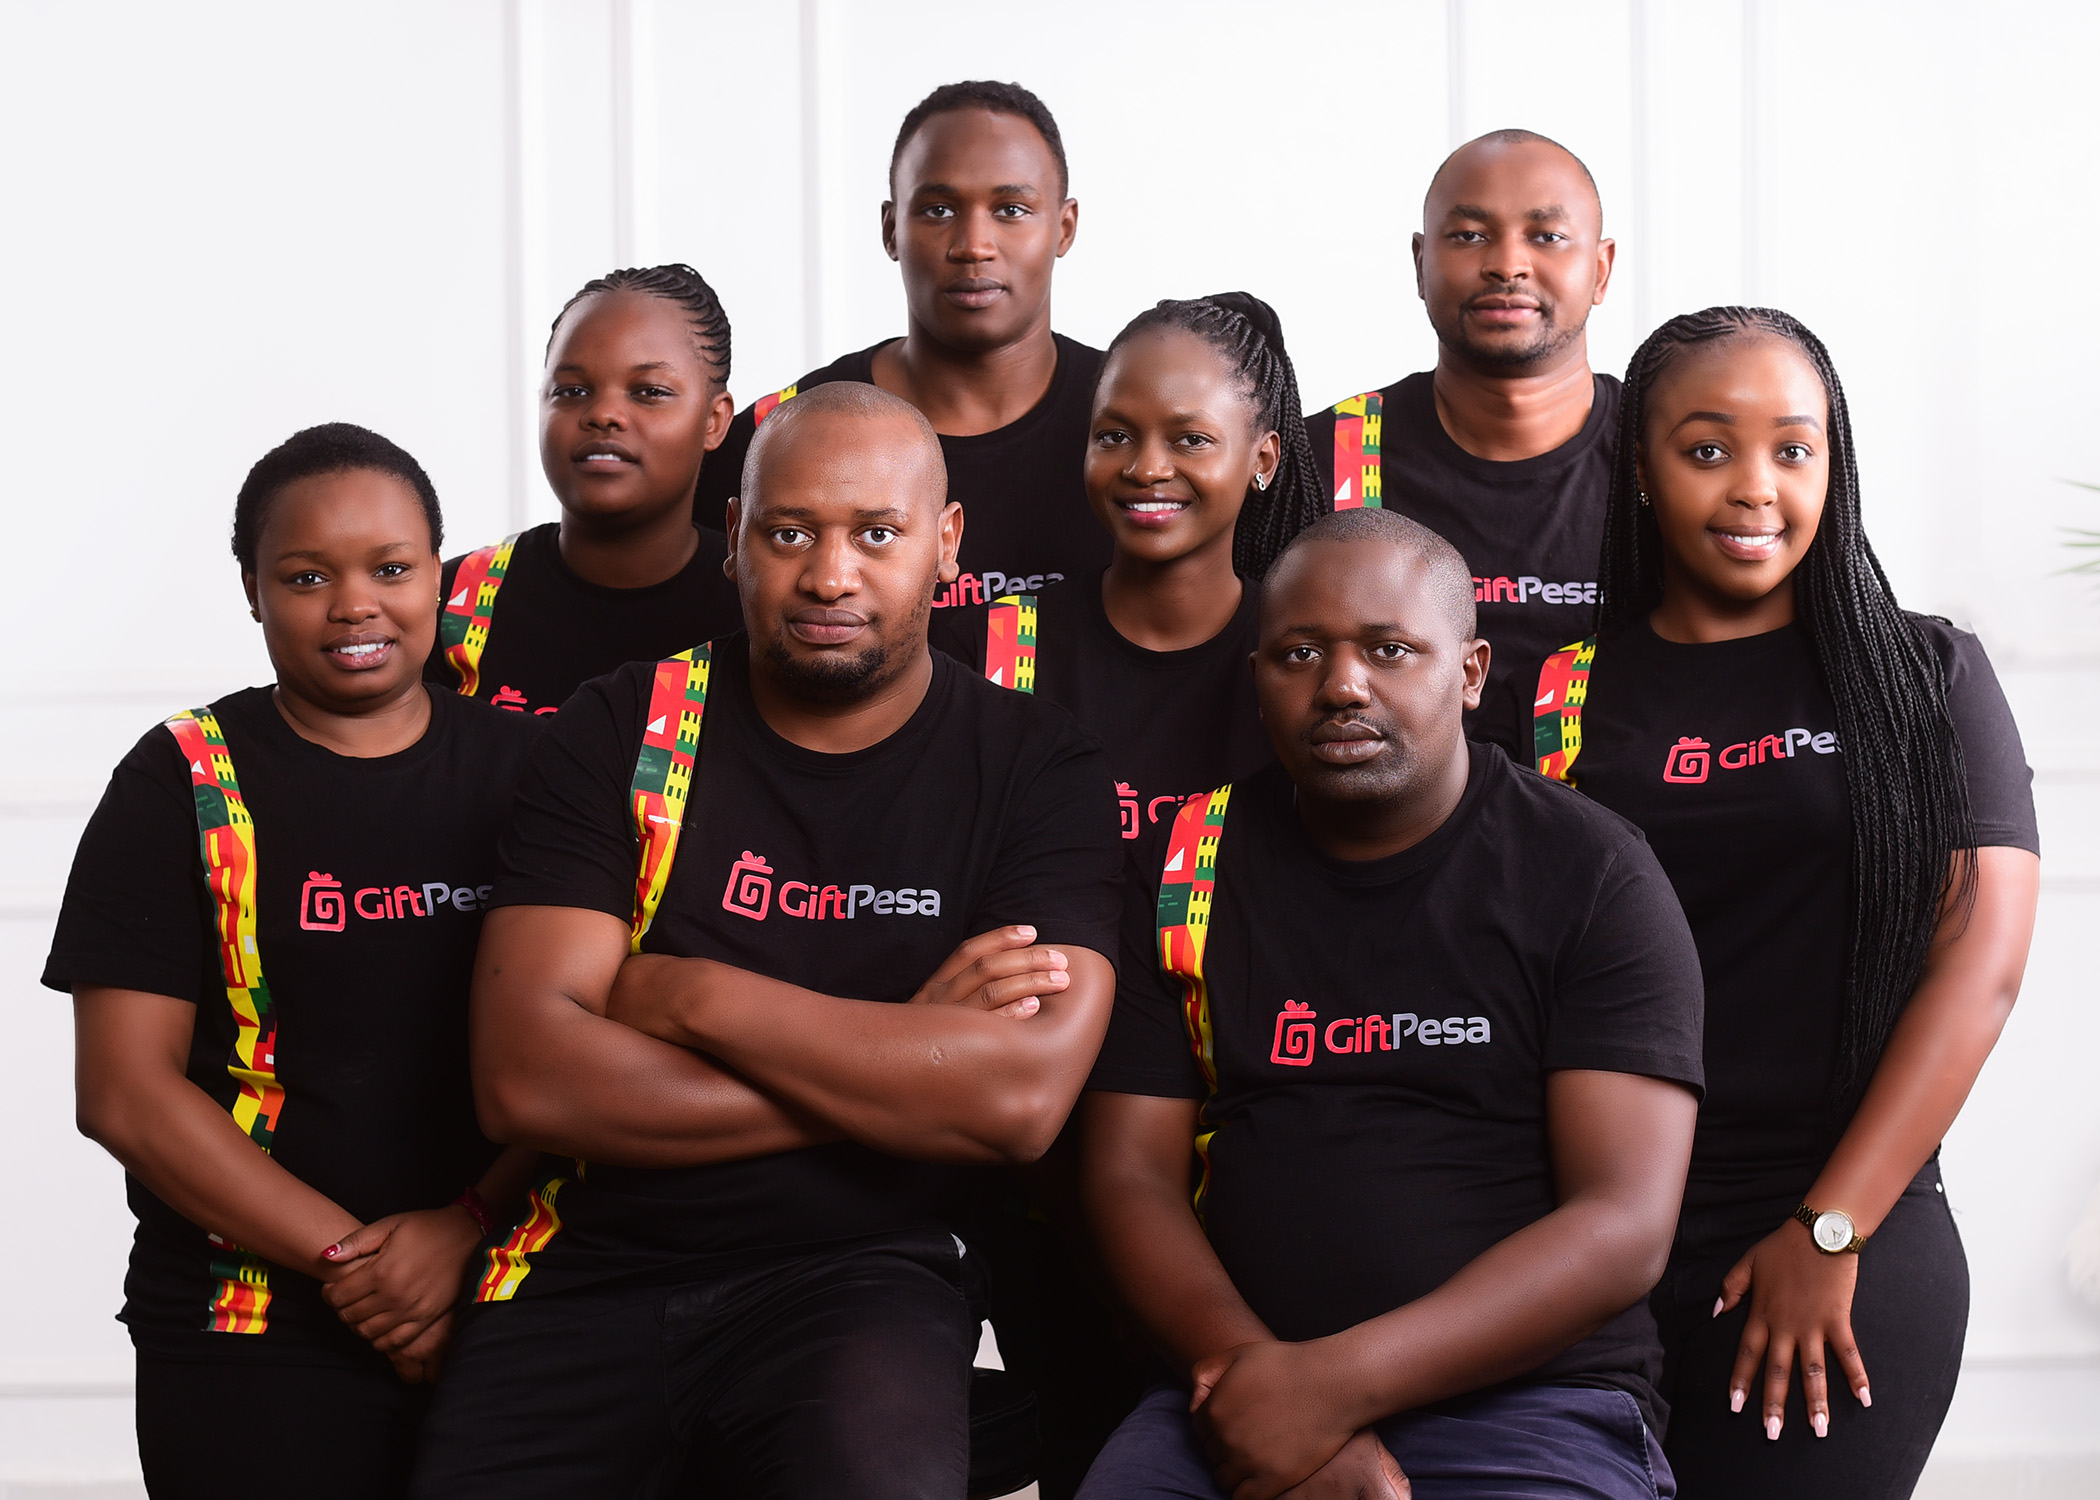 Giftpesa digital gifting platform team members